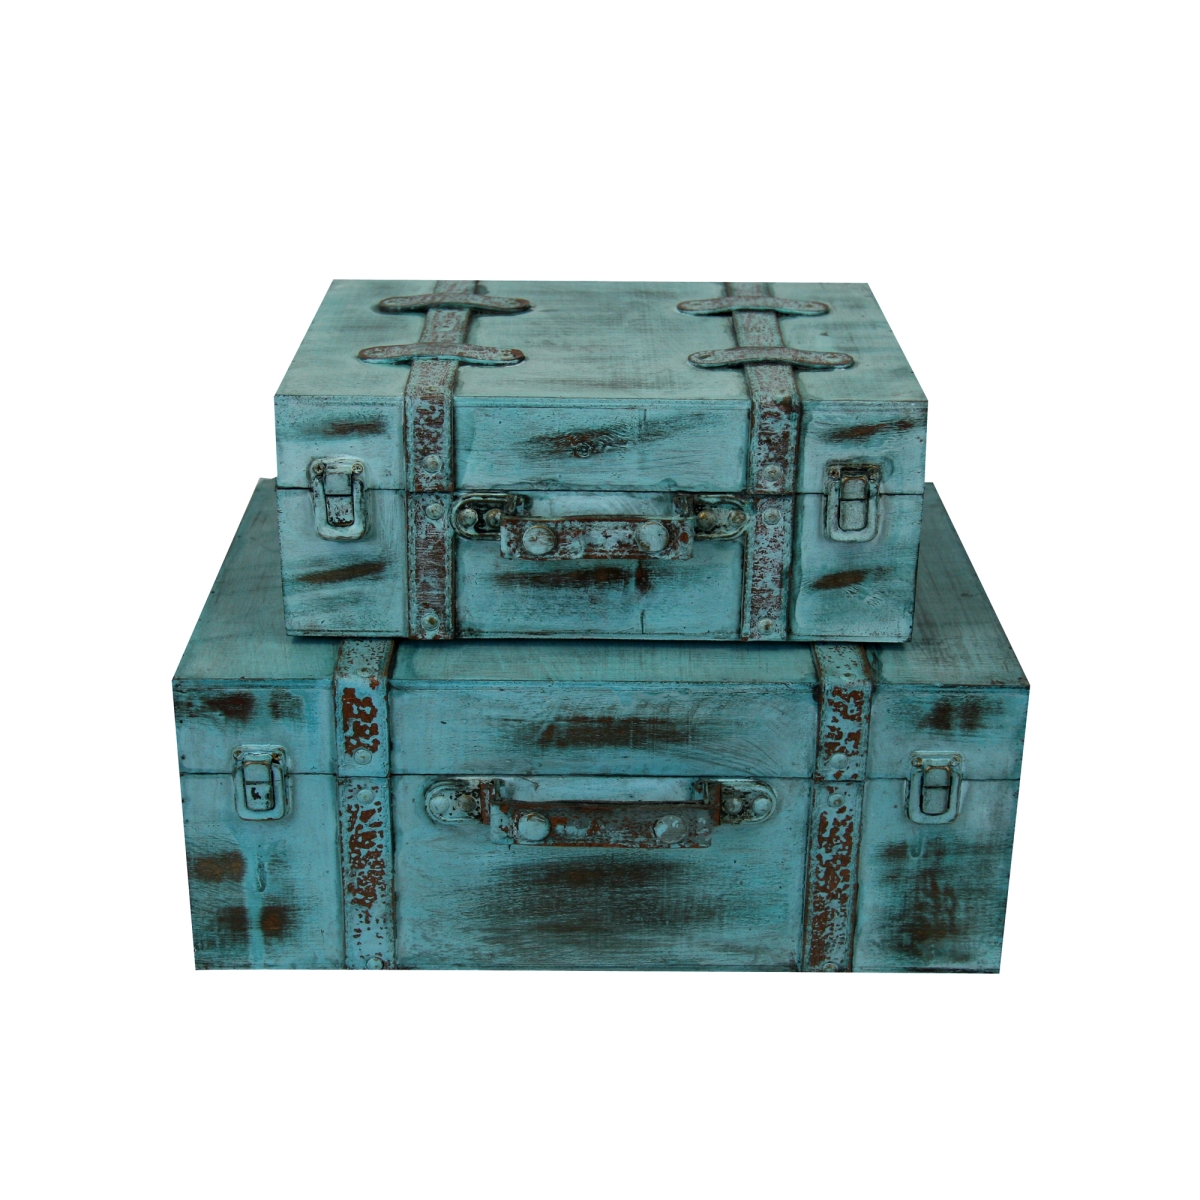 Bm-fzw17105 9.5 X 23.5 In. Storage Suitcase Set, Blue - 2 Piece